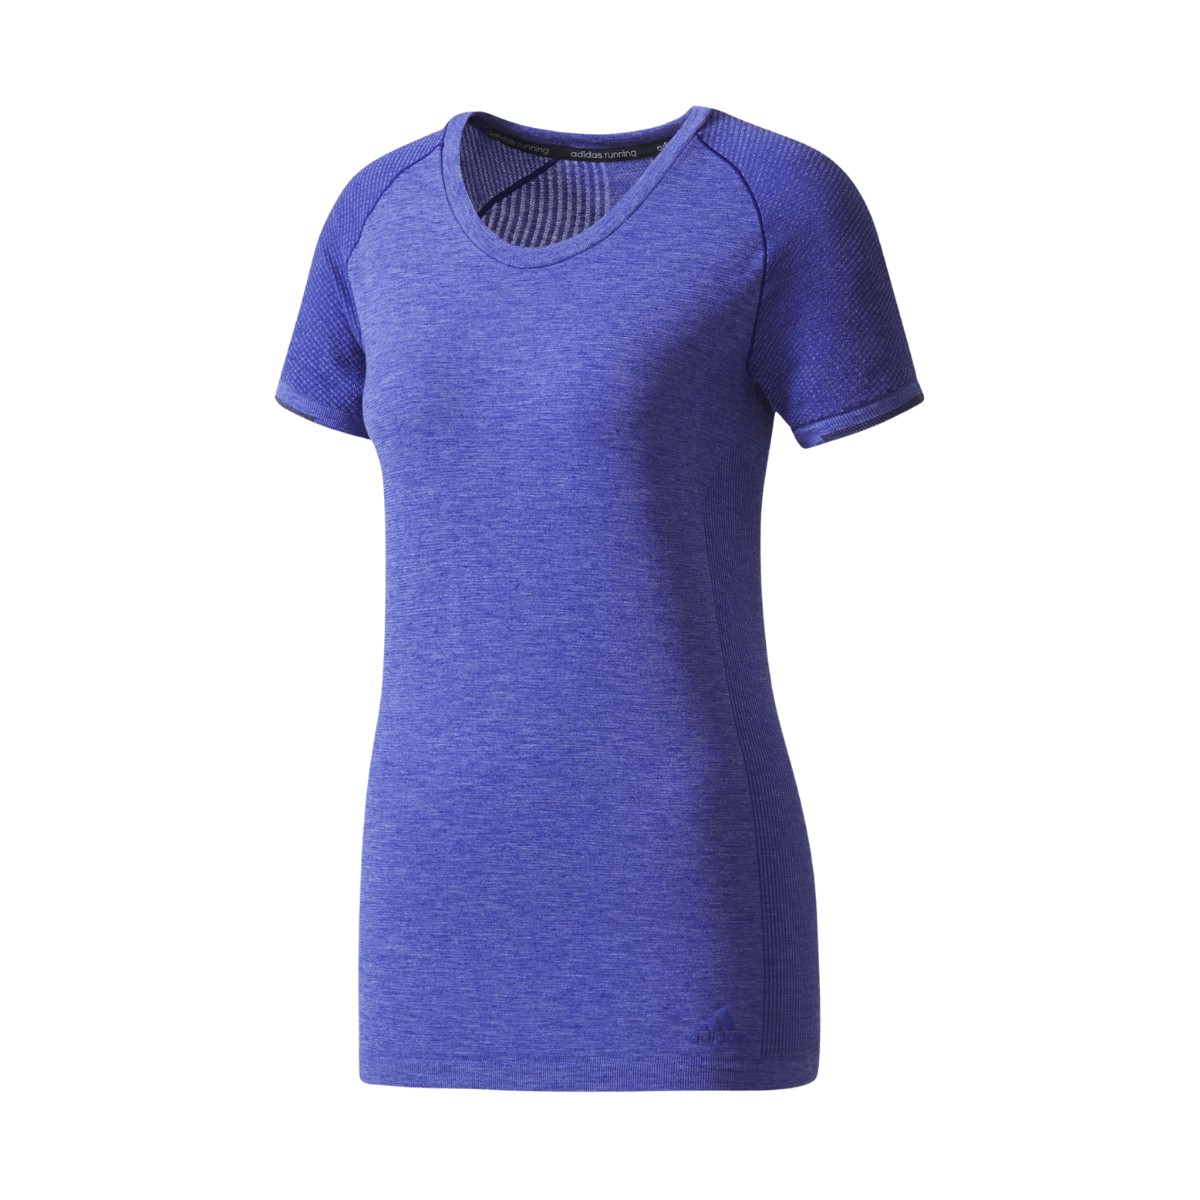 Camiseta maga corta Adidas Técnica Primeknit Wool Mujer Azul, Talla XS.